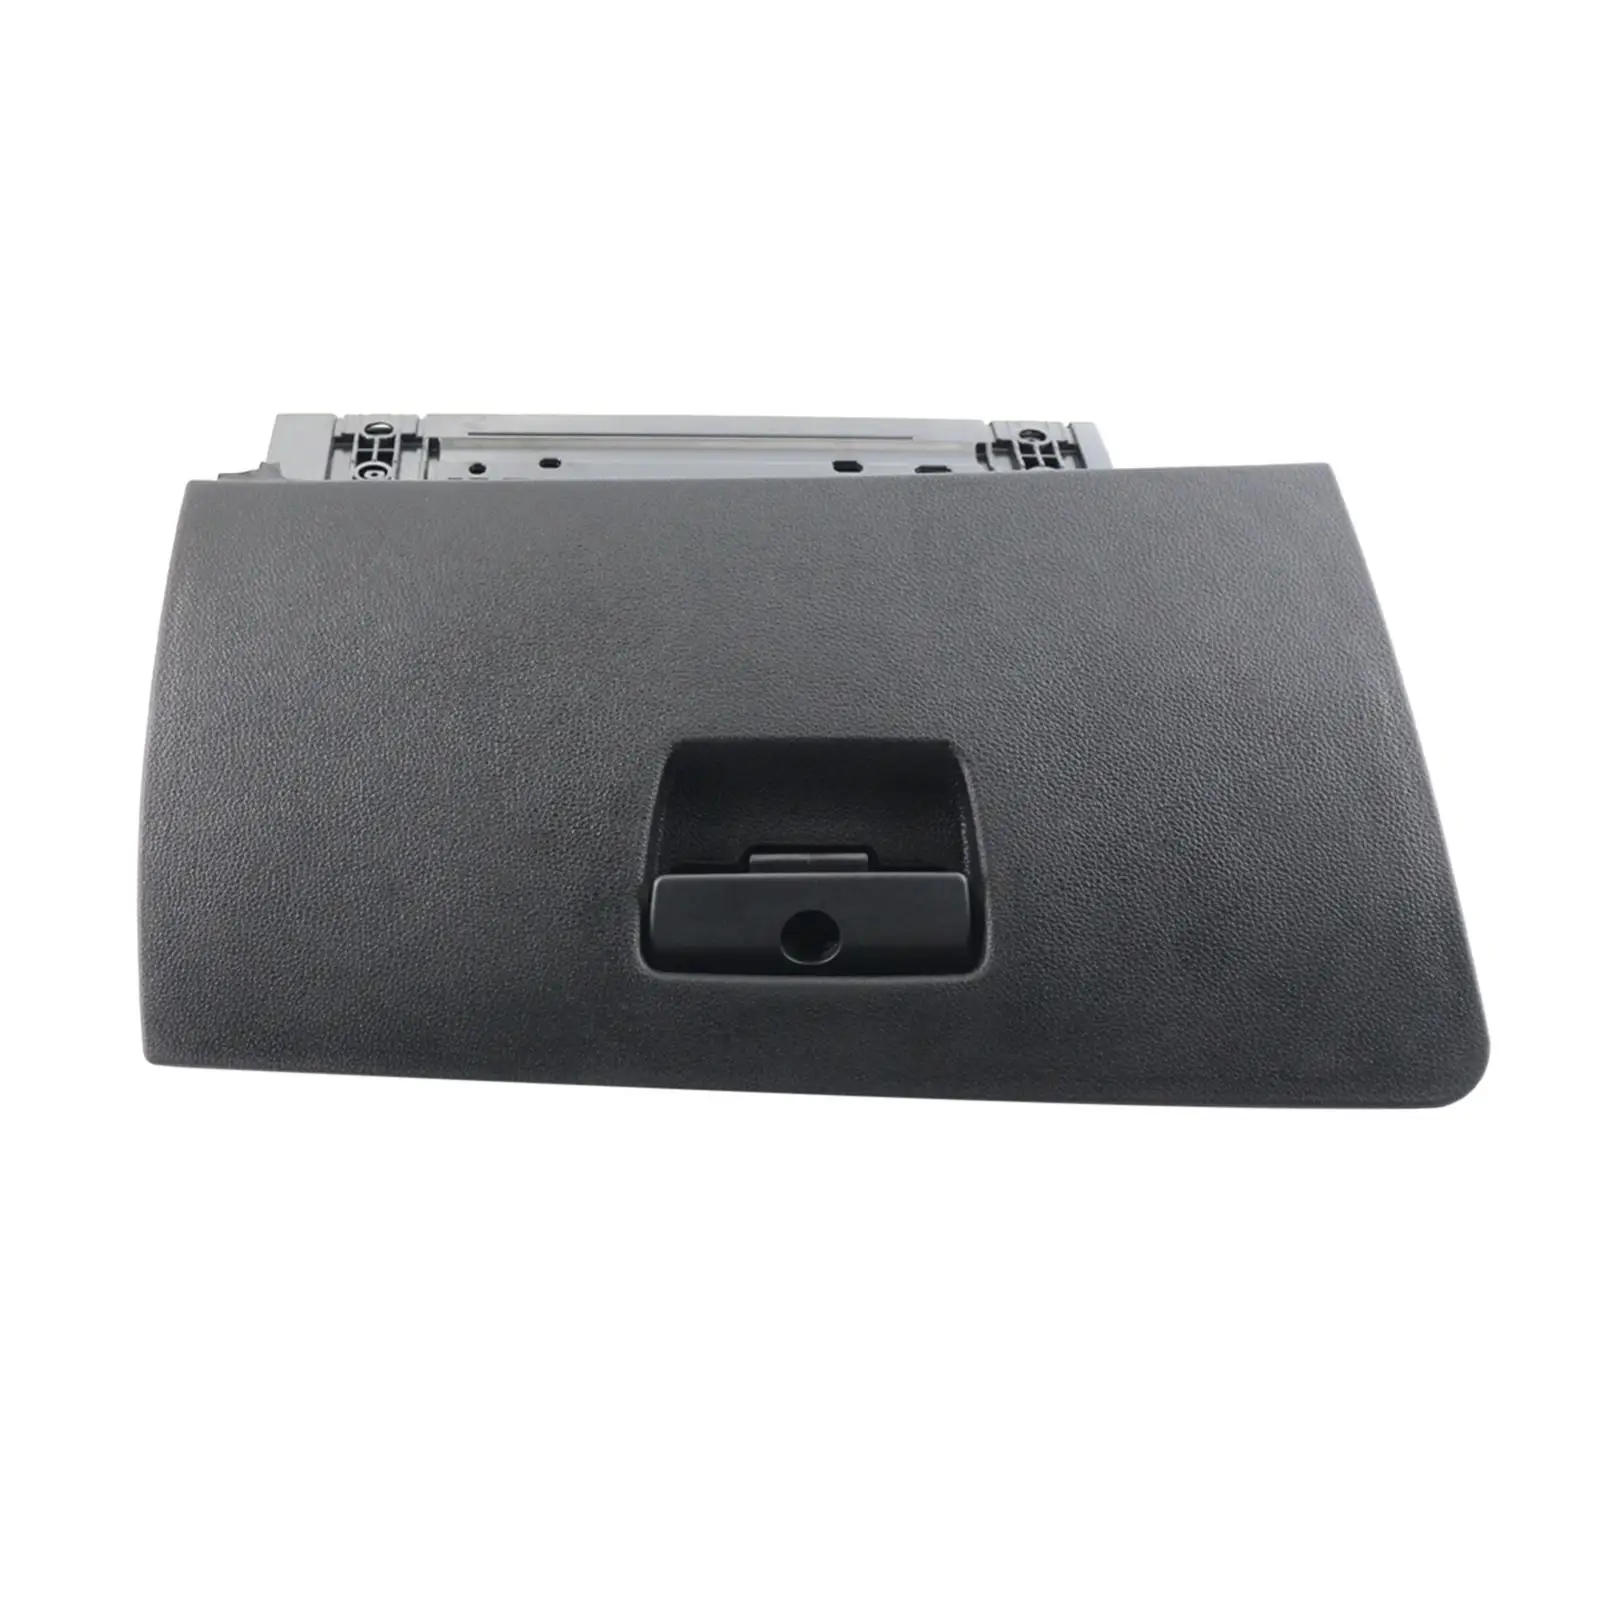 Glovebox Accessories Parts Practical Professional Portable Replaces Glove Box Storage Compartment for BMW E90 D91 E92 06-13